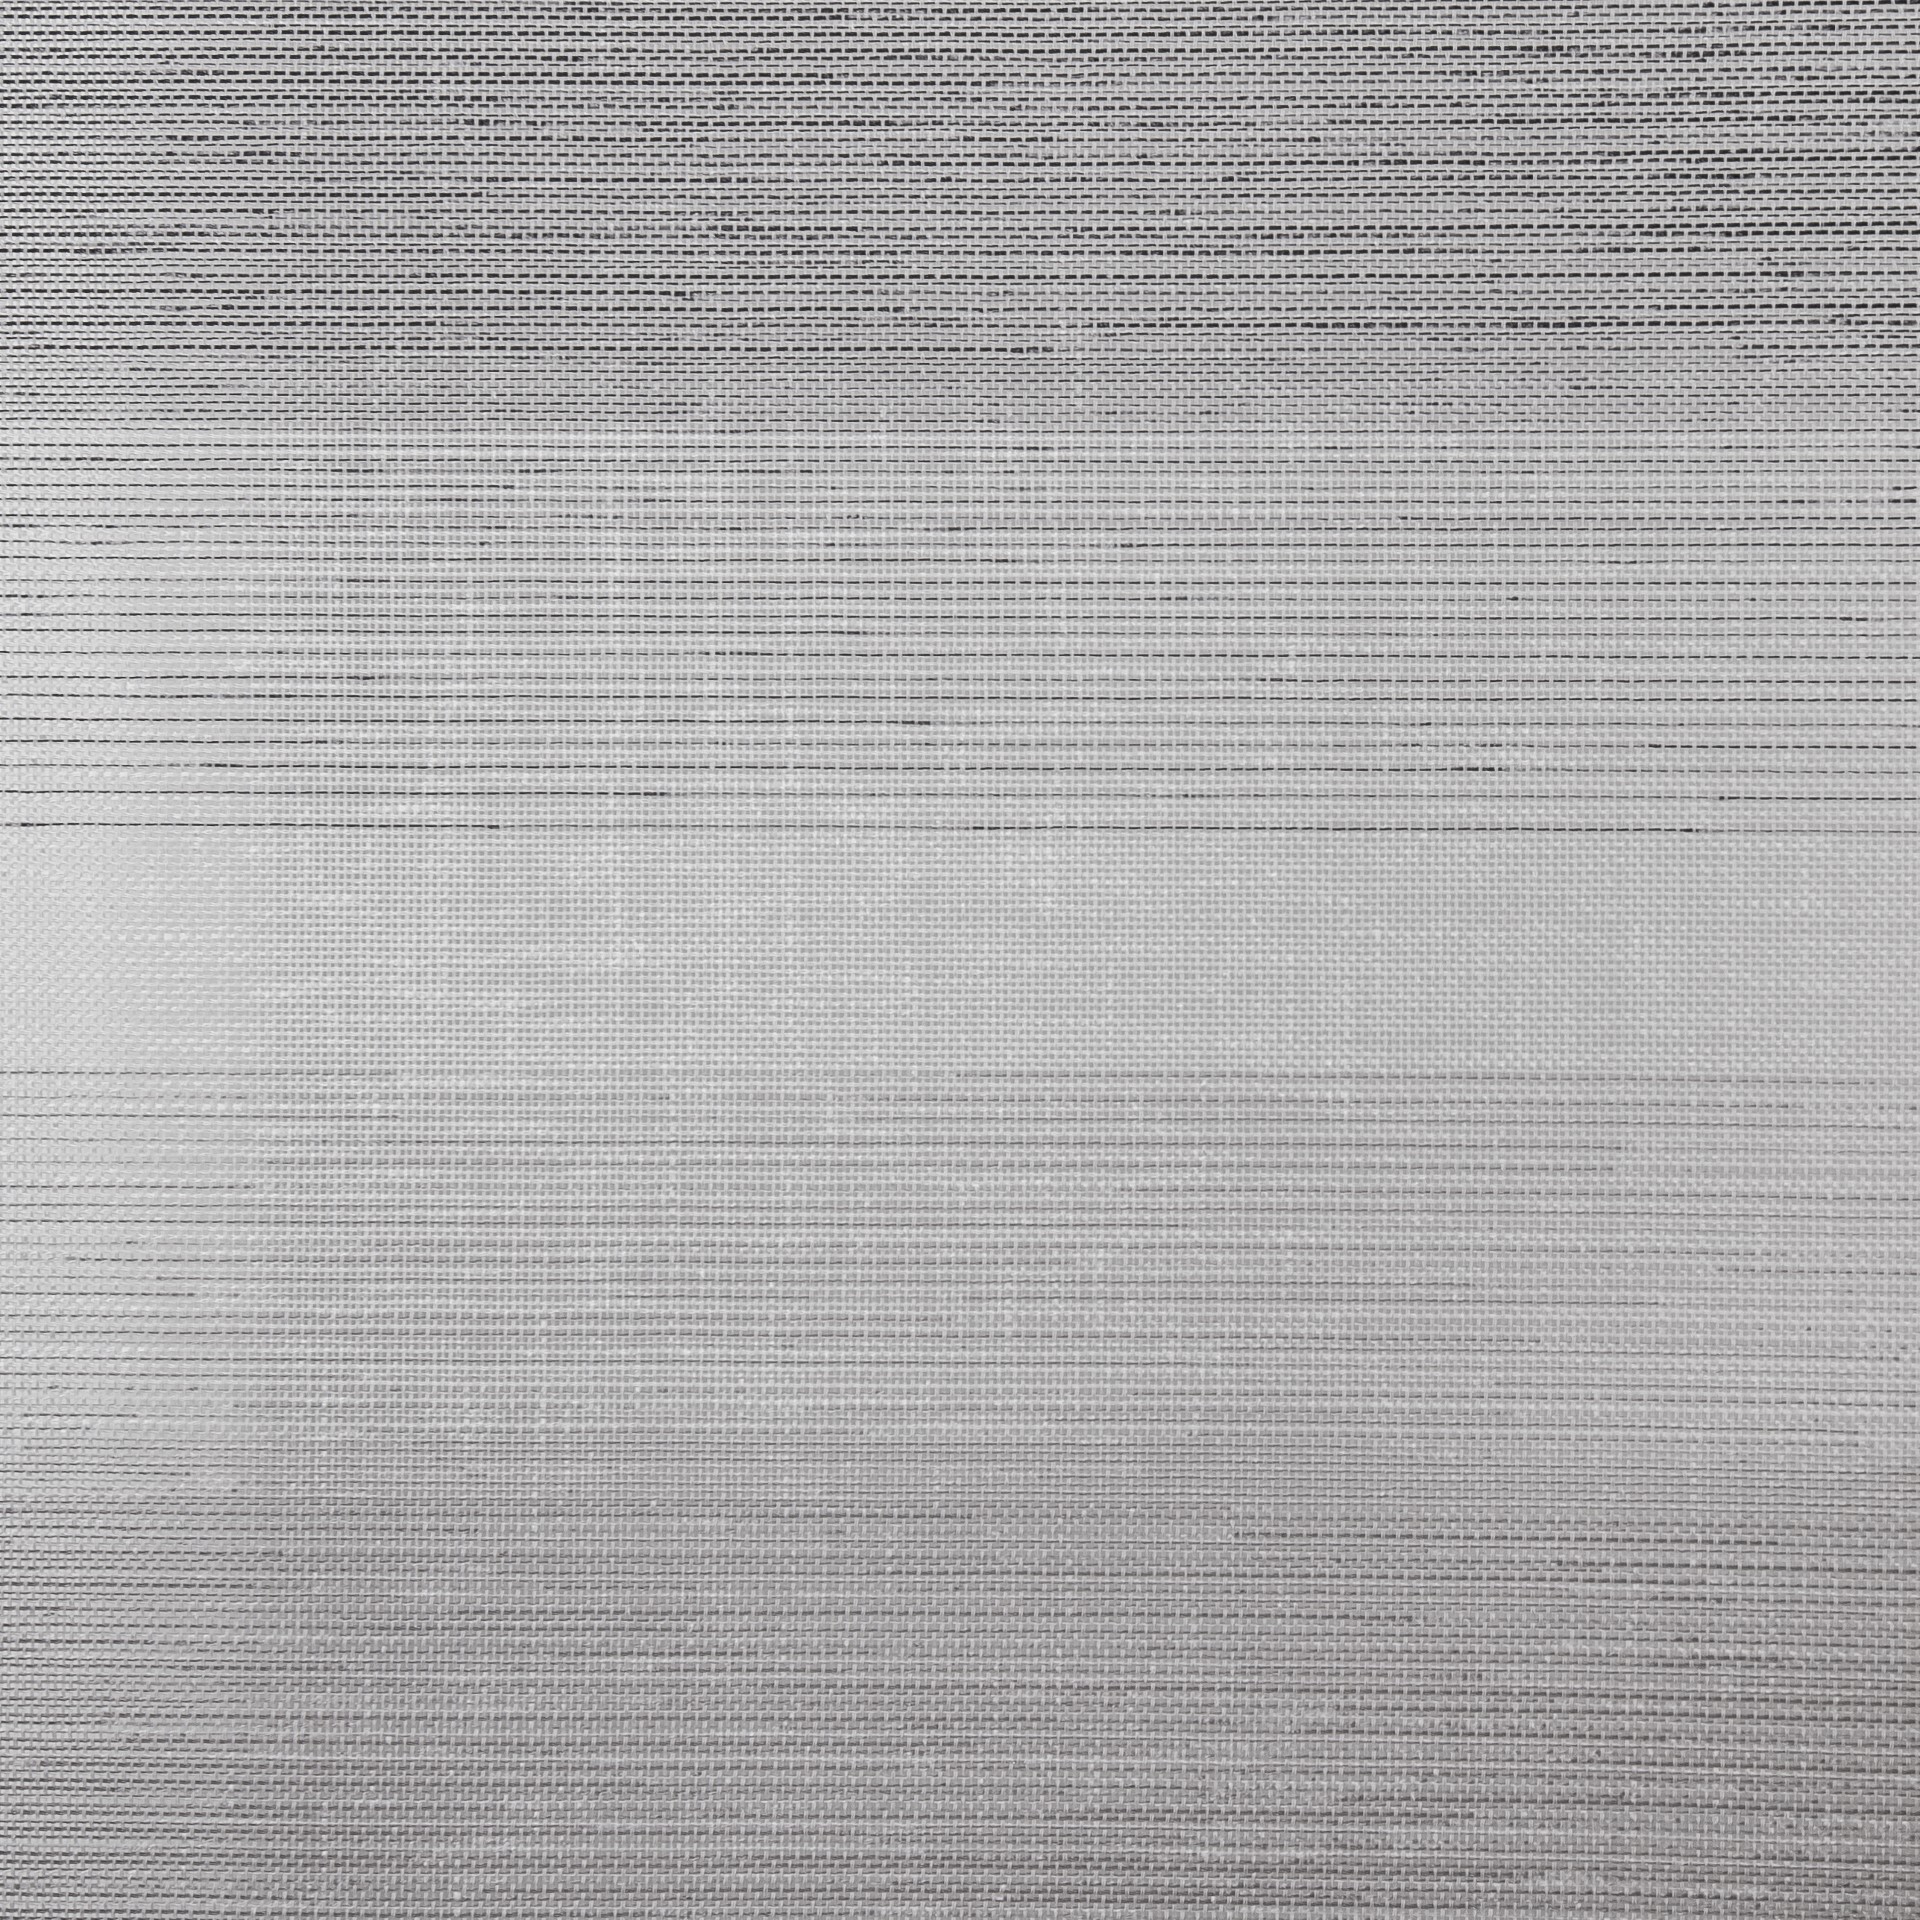 Tokyo Translucent Roller Blind Grey Fabric Detail